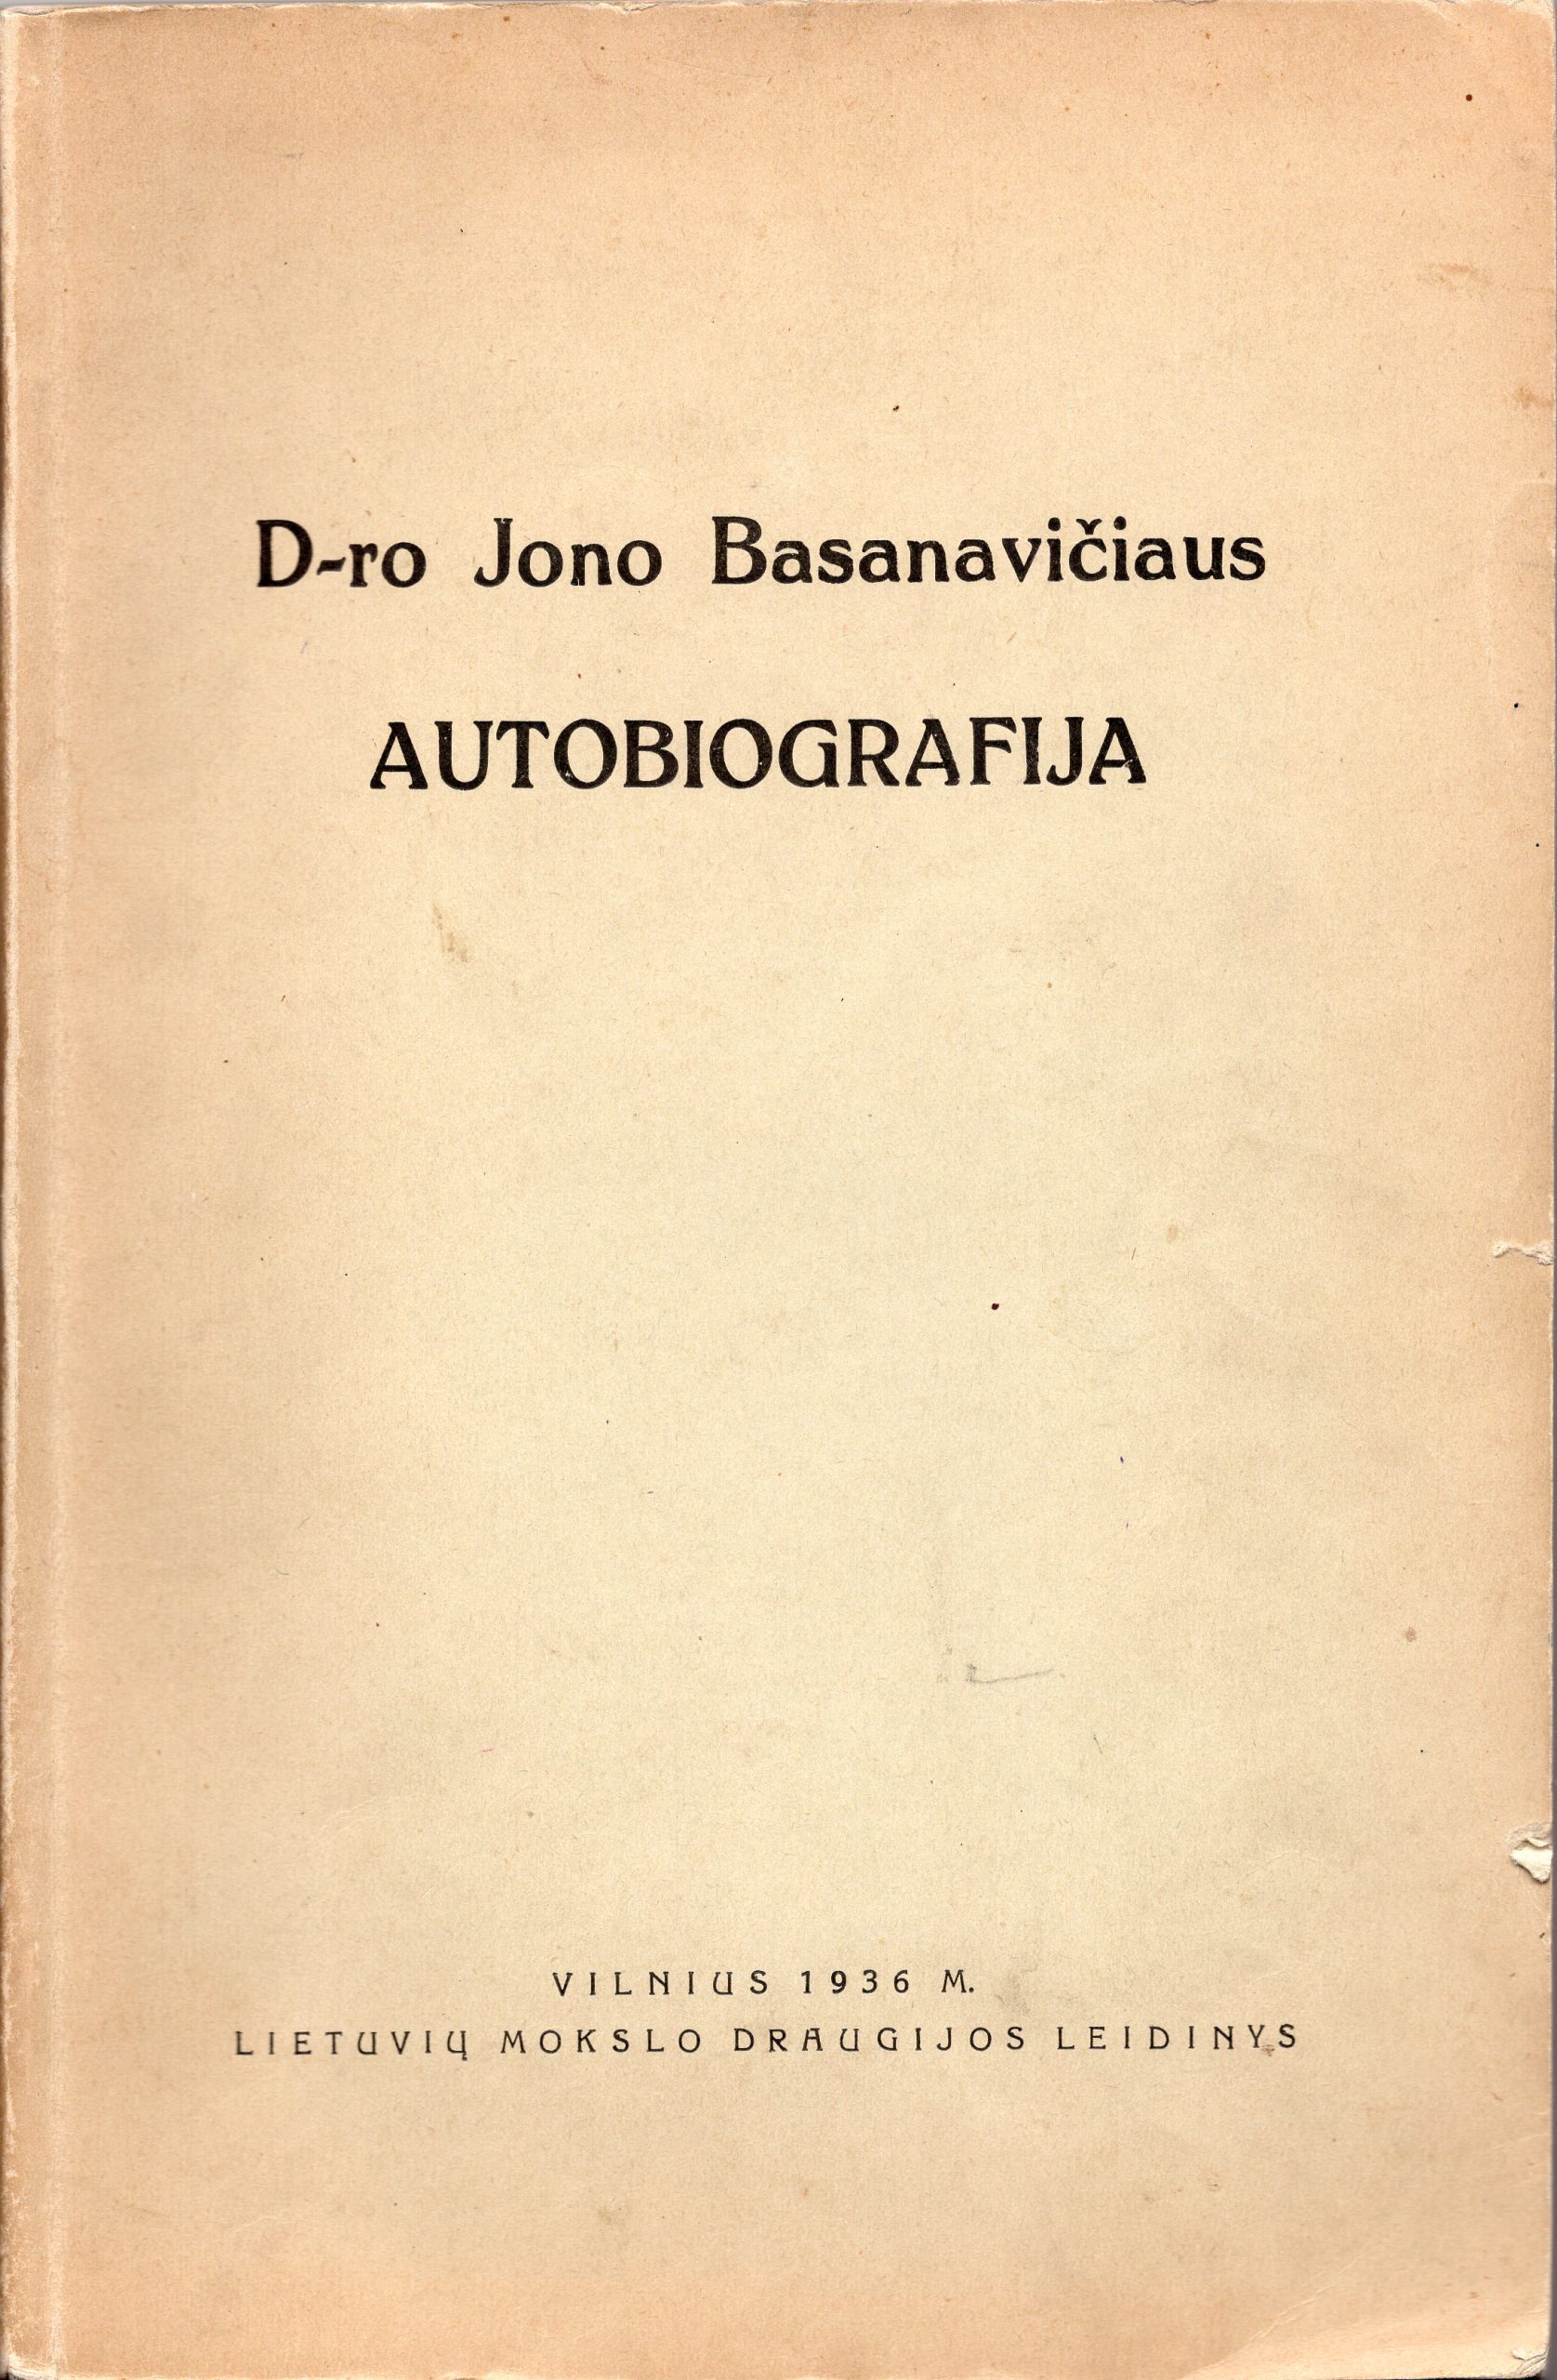 D-ro Jono Basanavičiaus autobiografija. Vilnius, 1936 m.